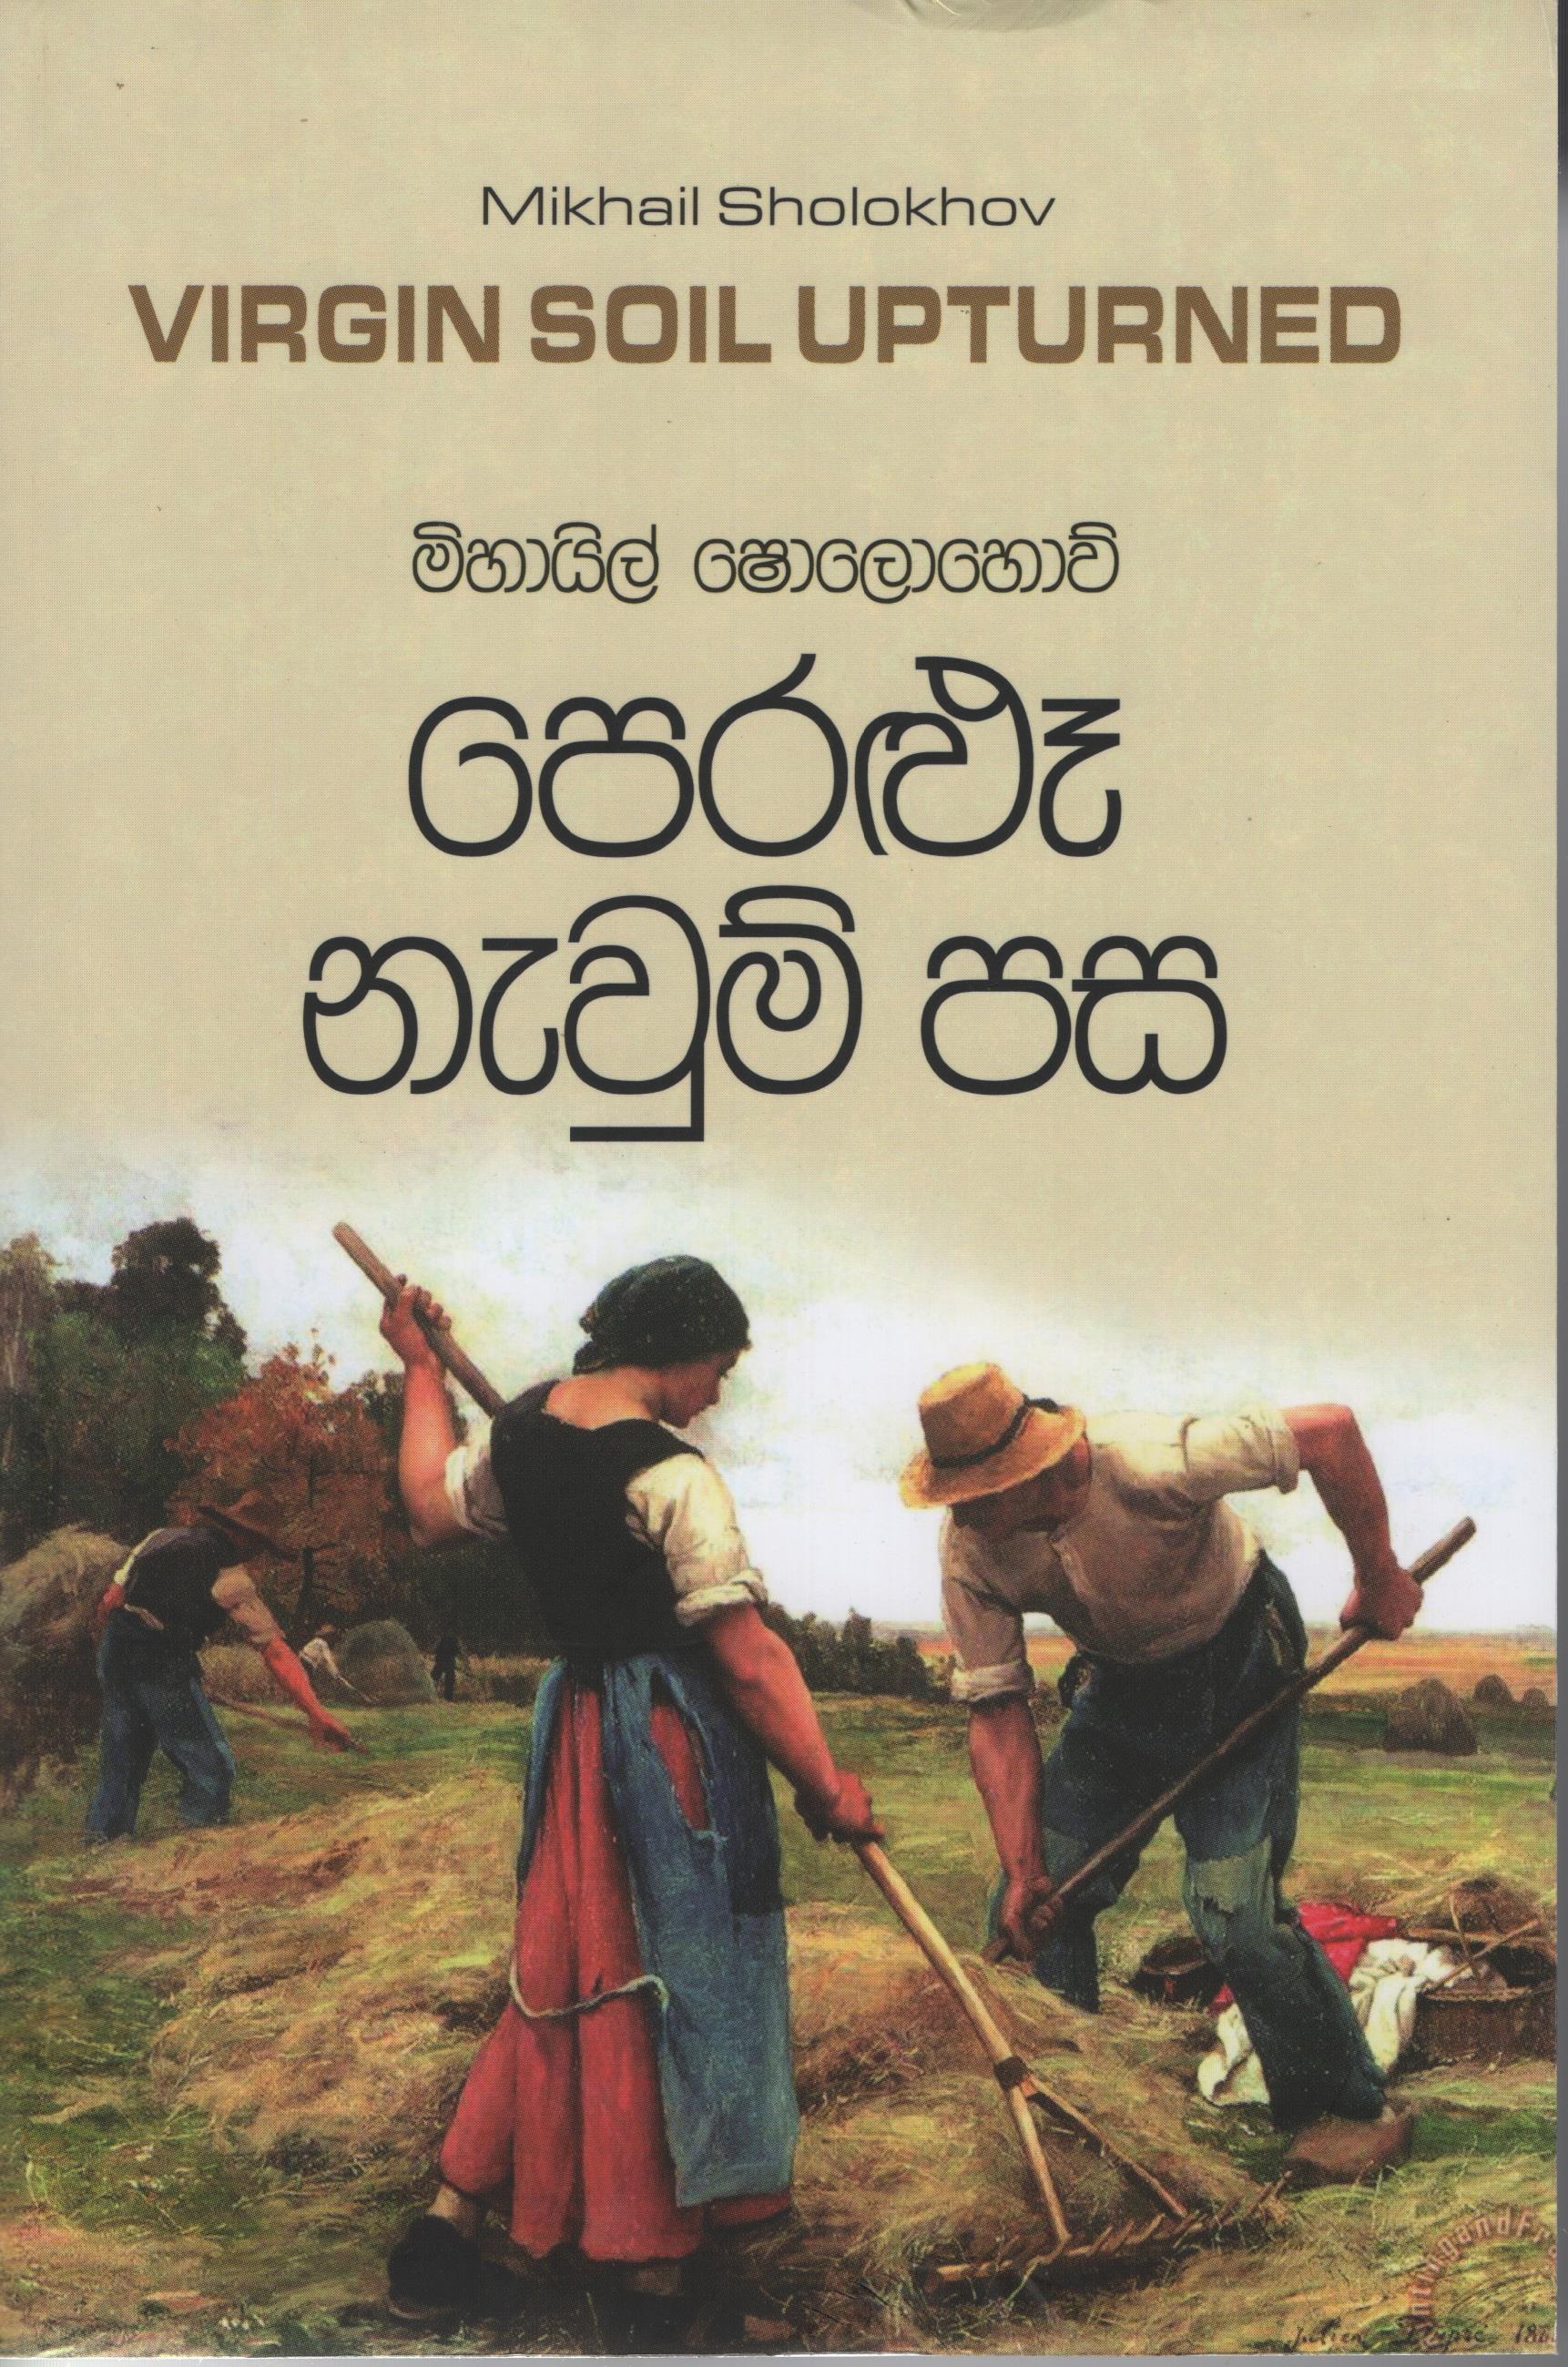 Peralu Naum Pasa - Translations of Virgin soil upturned by mikhail sholokhov